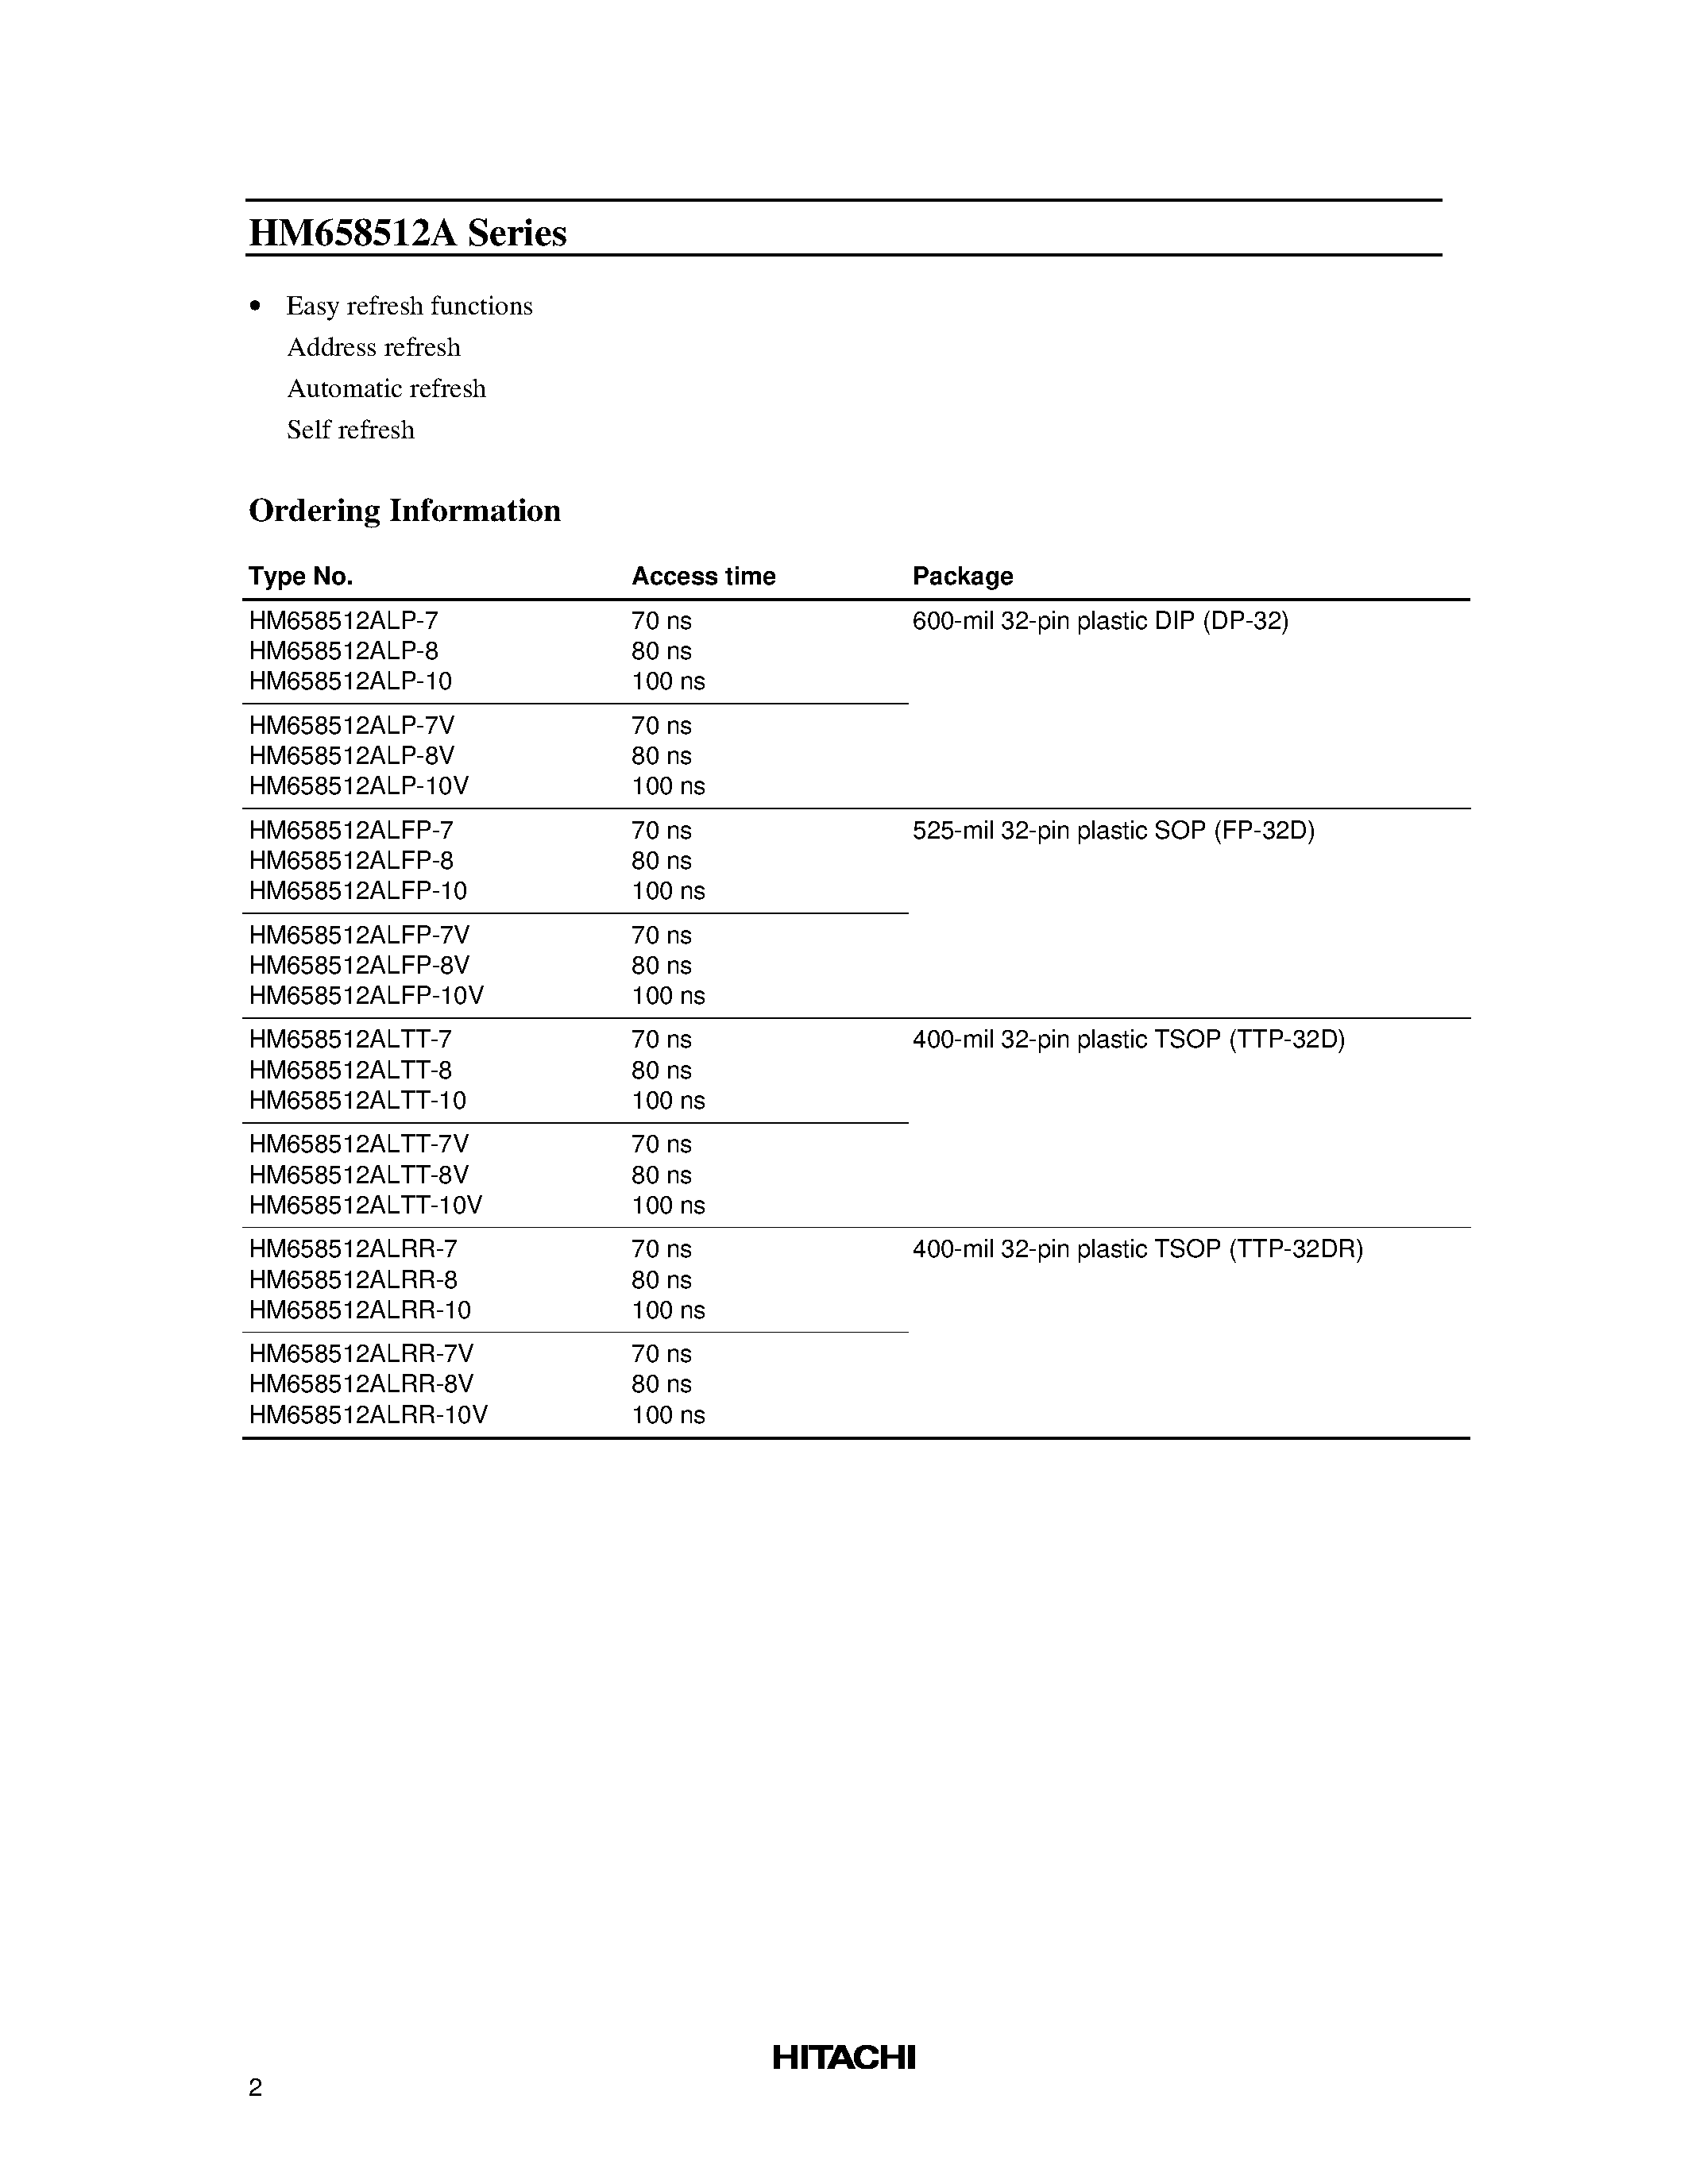 Datasheet HM658512ALFP-8 - 4 M PSRAM (512-kword x 8-bit) 2 k Refresh page 2